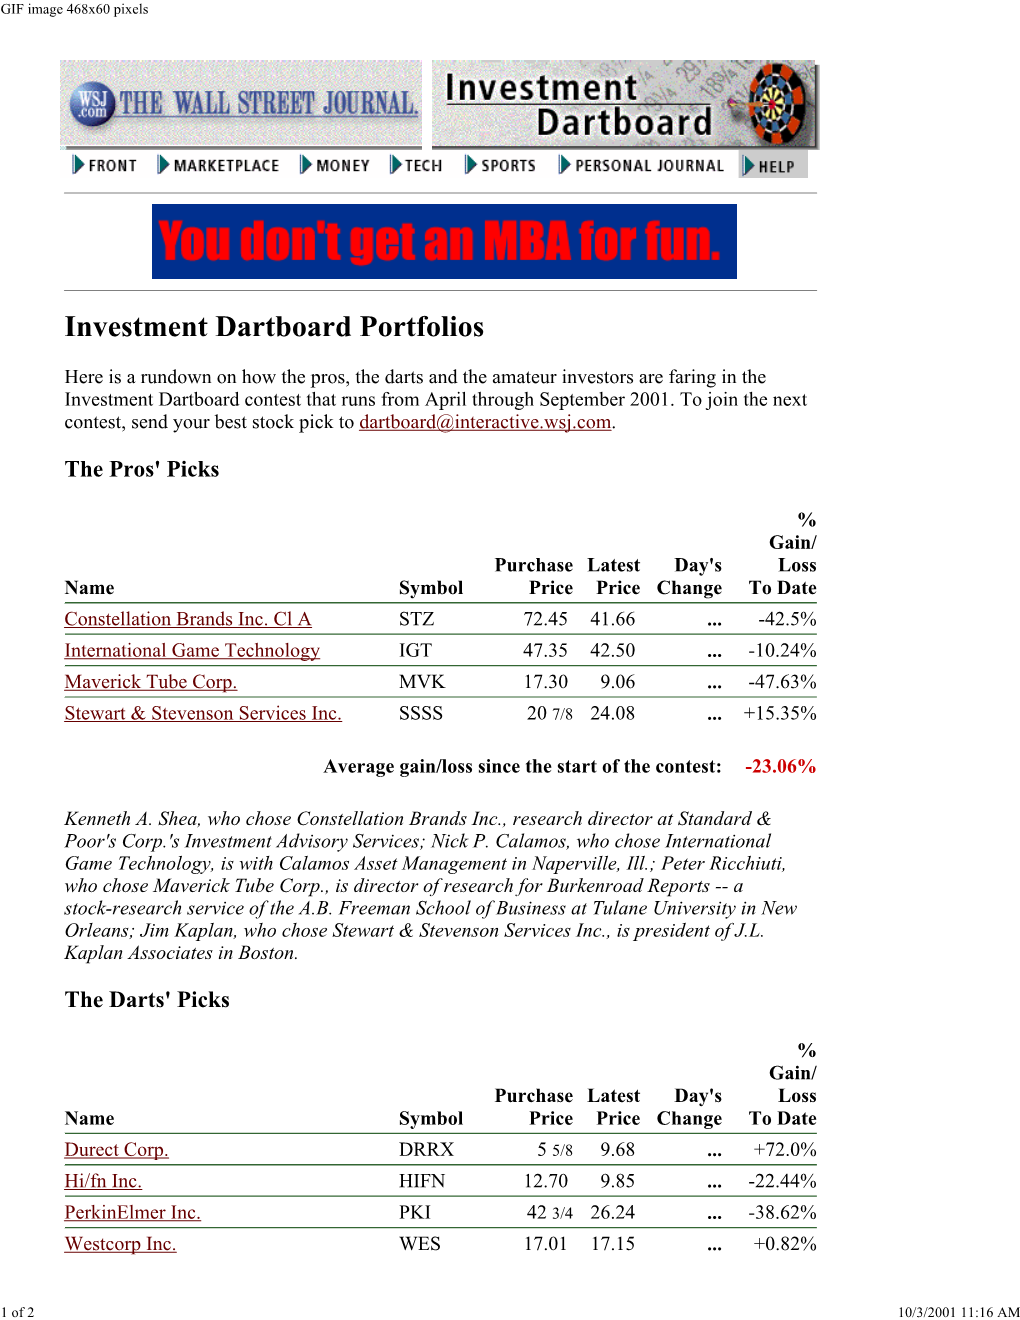 Investment Dartboard Portfolios